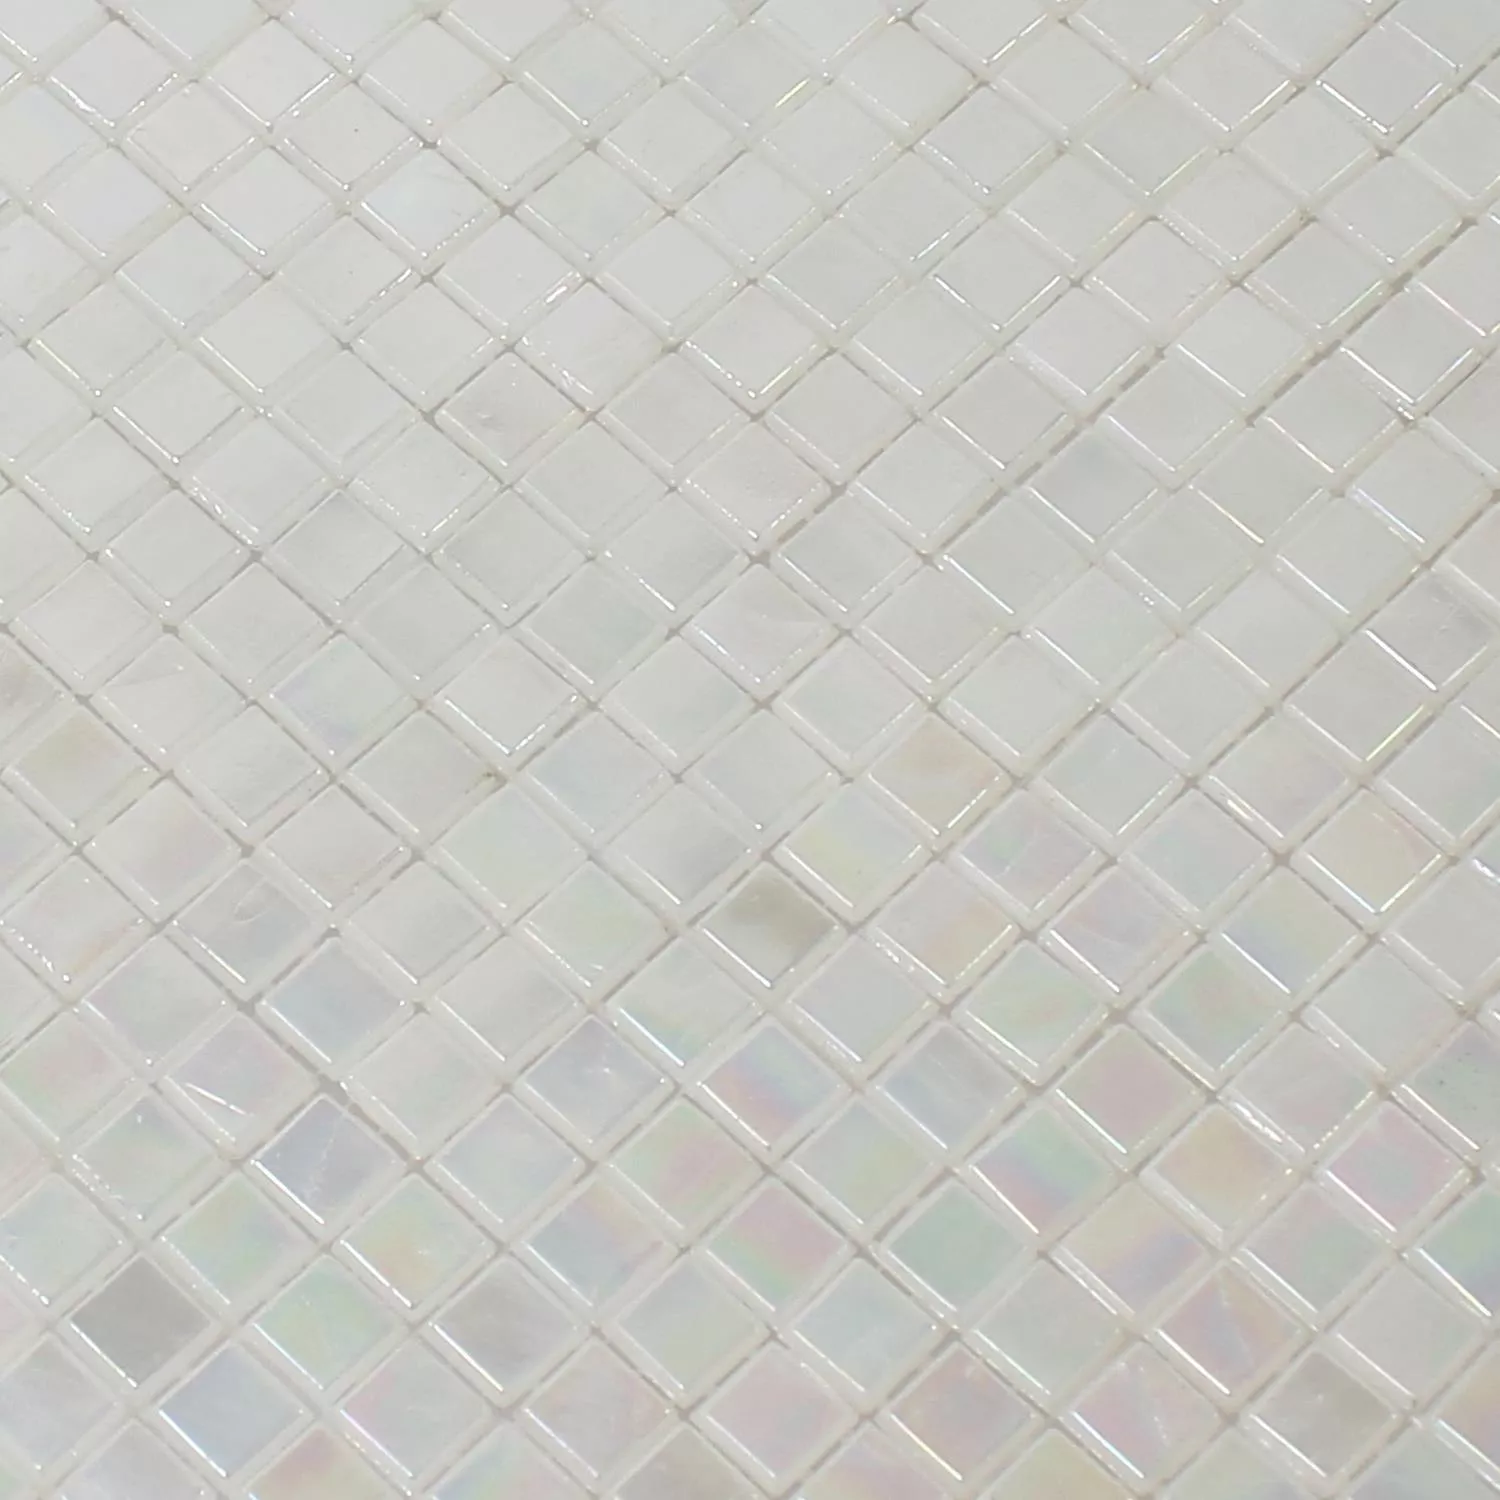 Sample Mosaic Tiles Glass Nacre Effect White Beige